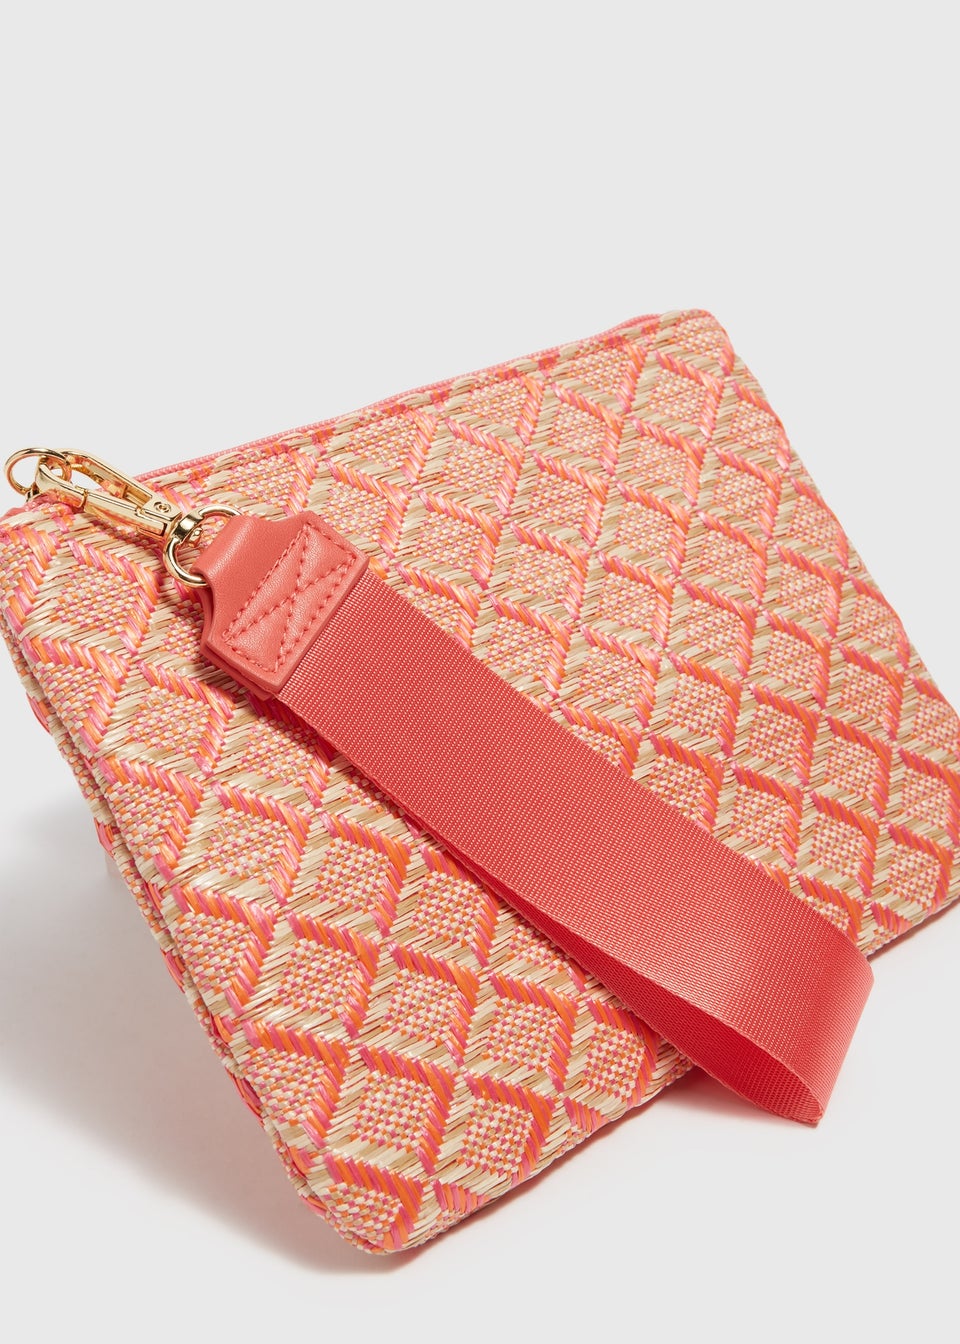 Wristlet Clutch Pink bag